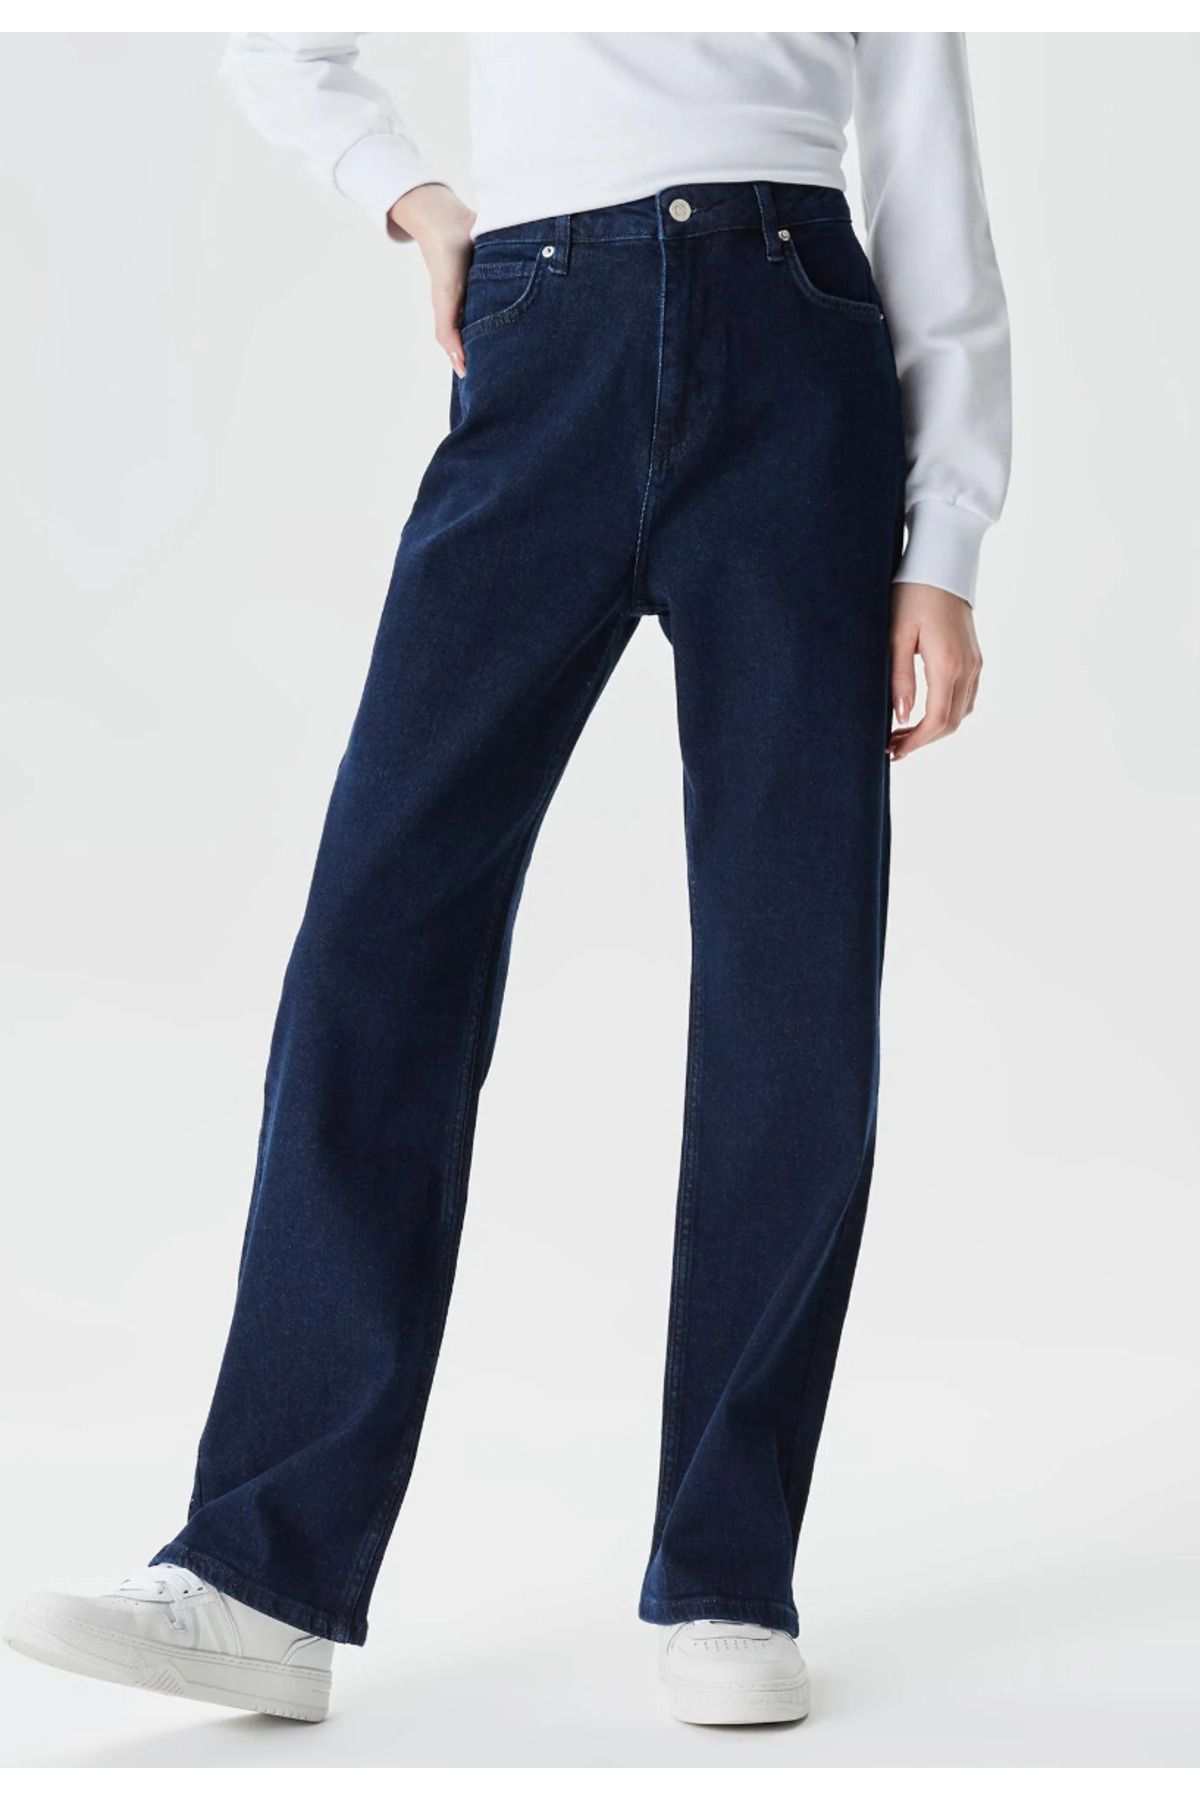 Lacoste Women's Straight Fit Denim Jeans